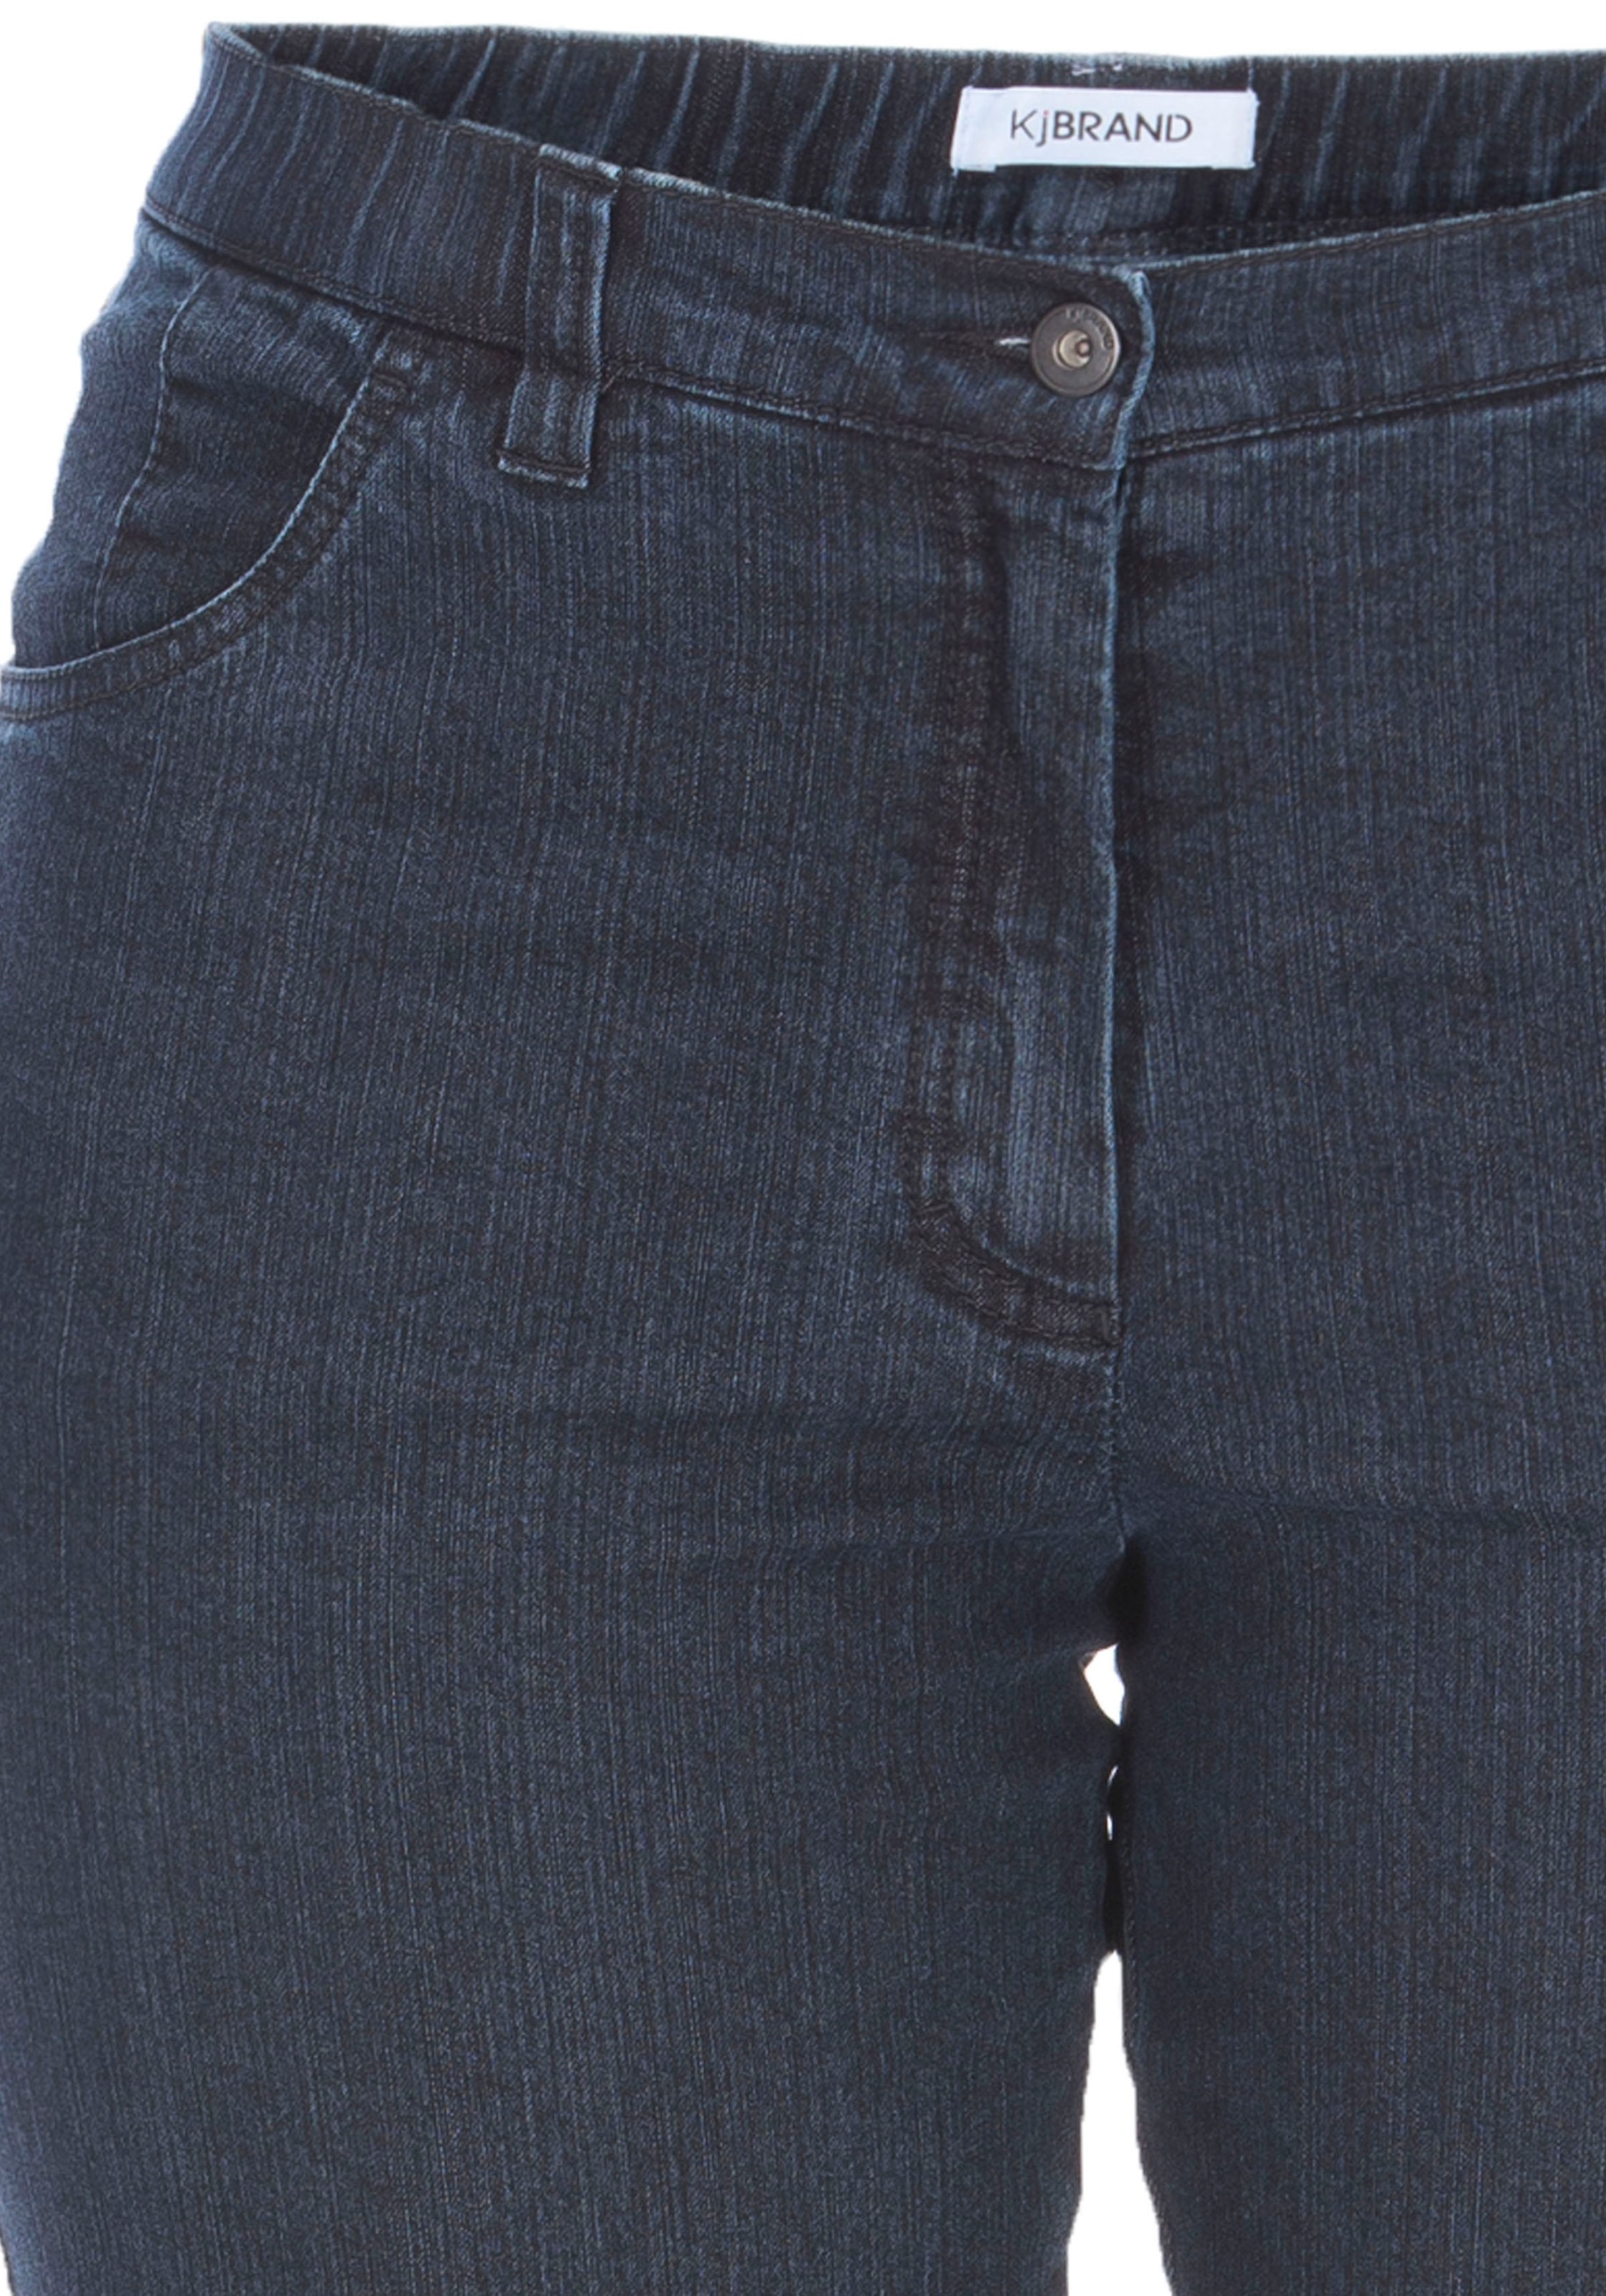 KjBRAND Stretch-Jeans »Betty Stretch« OTTO Online Shop Denim im